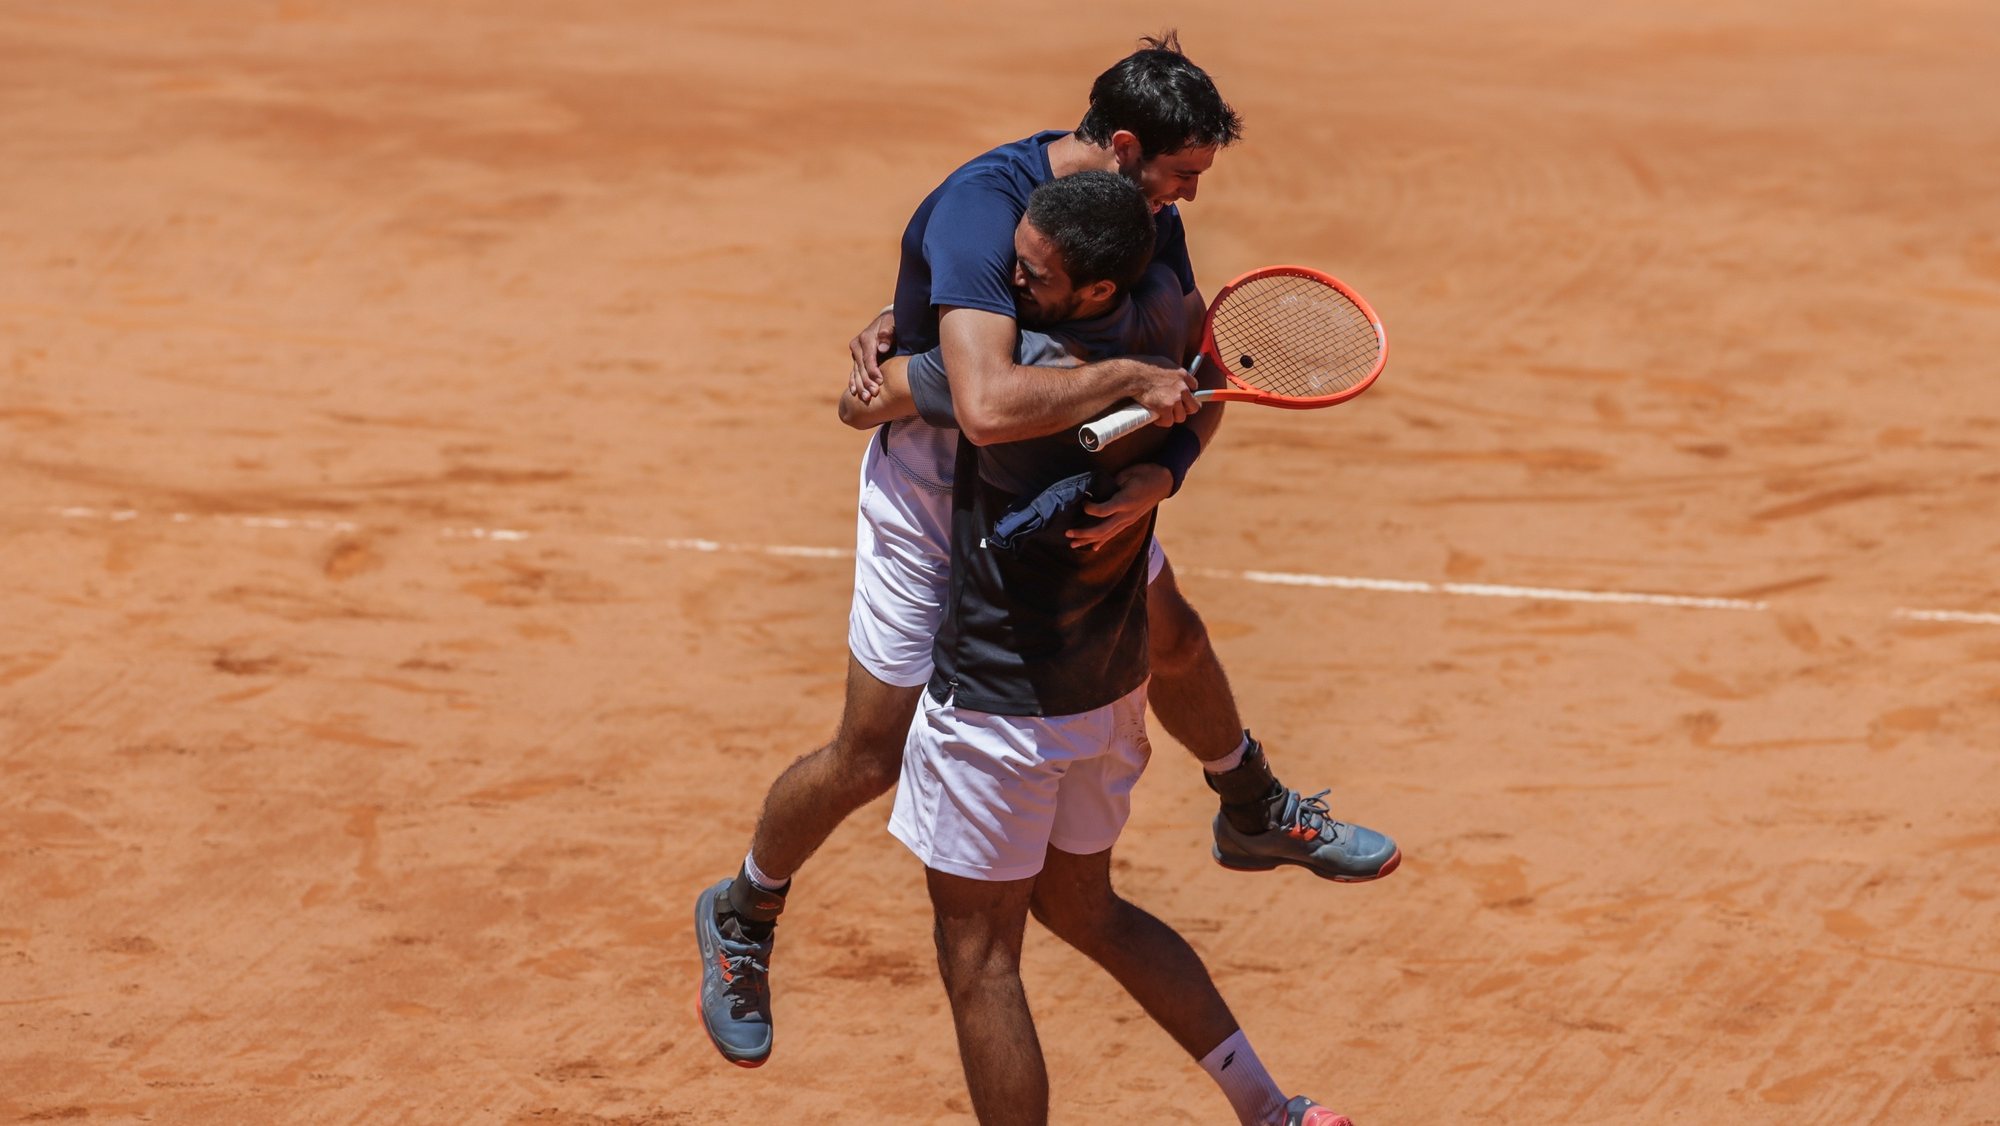 A dupla de tenistas portugueses Nuno Borges e Francisco Cabral venceu a final de pares do Estoril Open 2022, contra a dupla composta por Maximo Gonzalez e Andre Goransson Estoril, 01 de maio de 2022. TIAGO PETINGA/LUSA